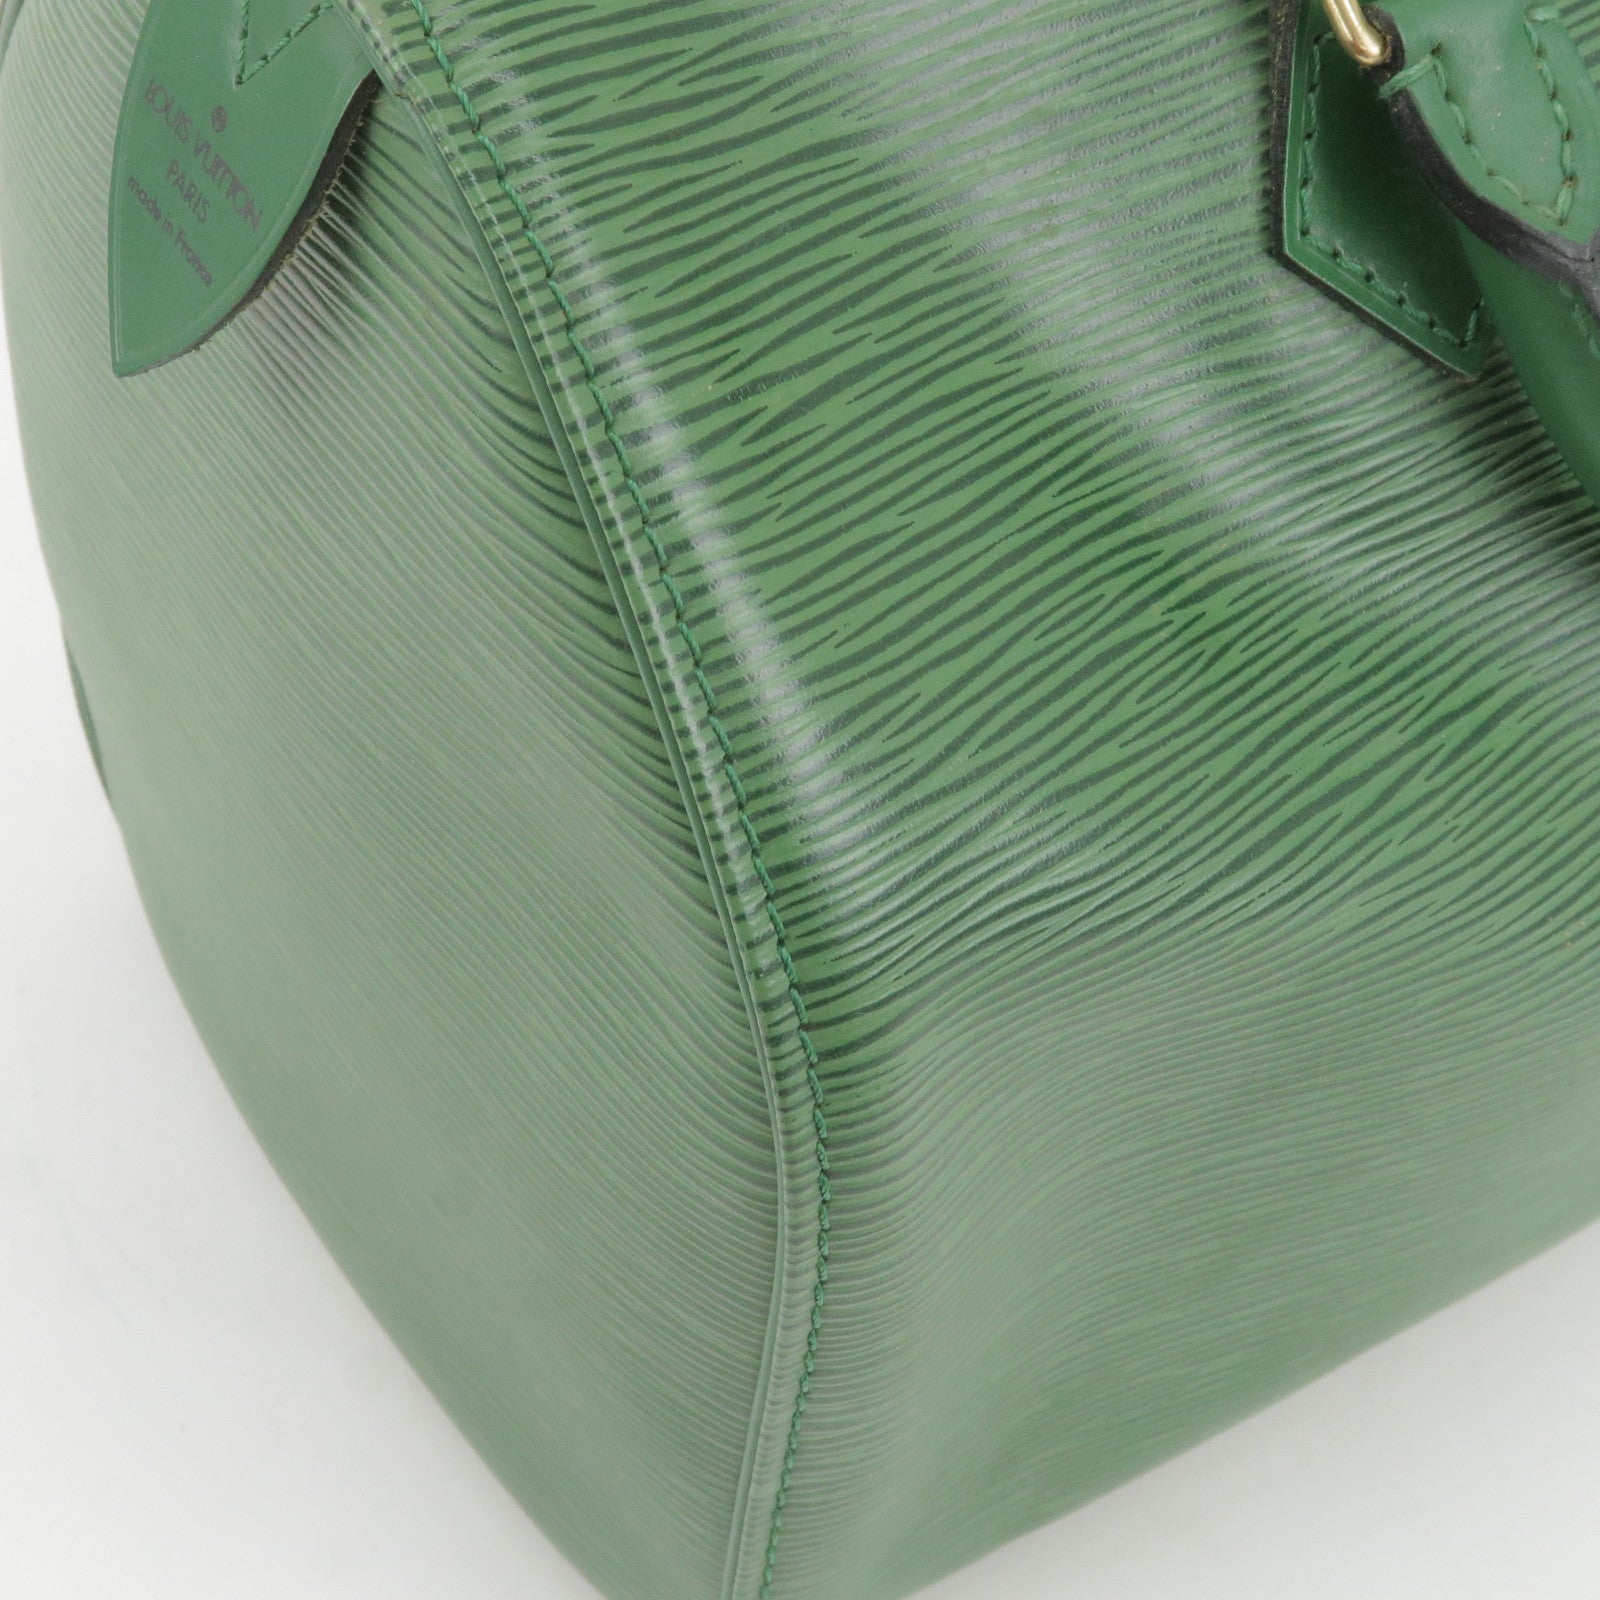 Epi Leather Borneo Green Speedy 30 Handbag – The Brown Bag Boutique